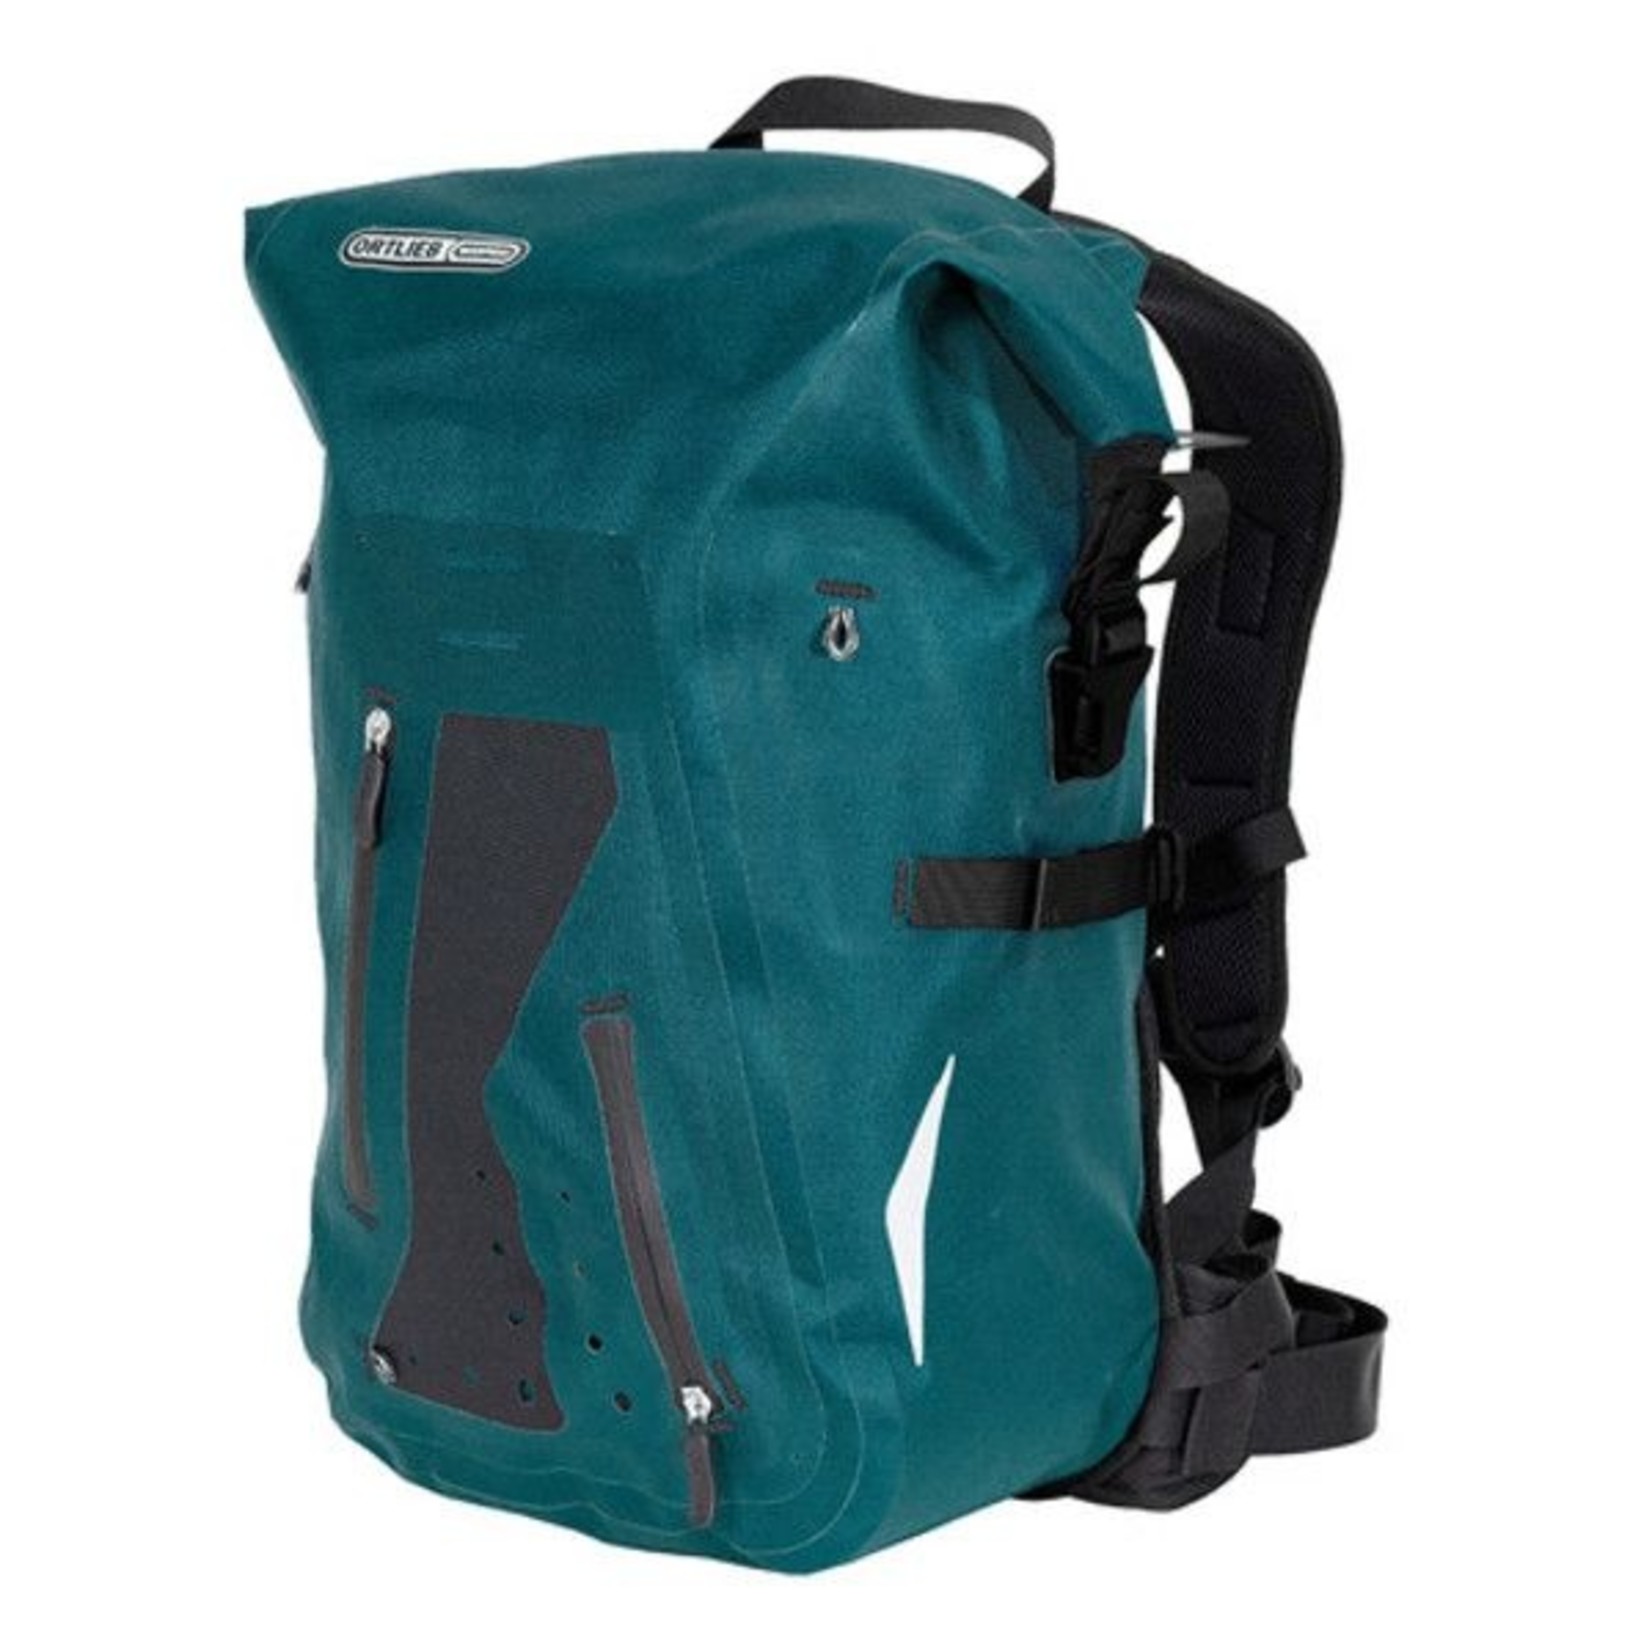 Ortlieb New Ortlieb Packman Pro2 Backpack Bag R3212 -  25L Petrol- Waterproof